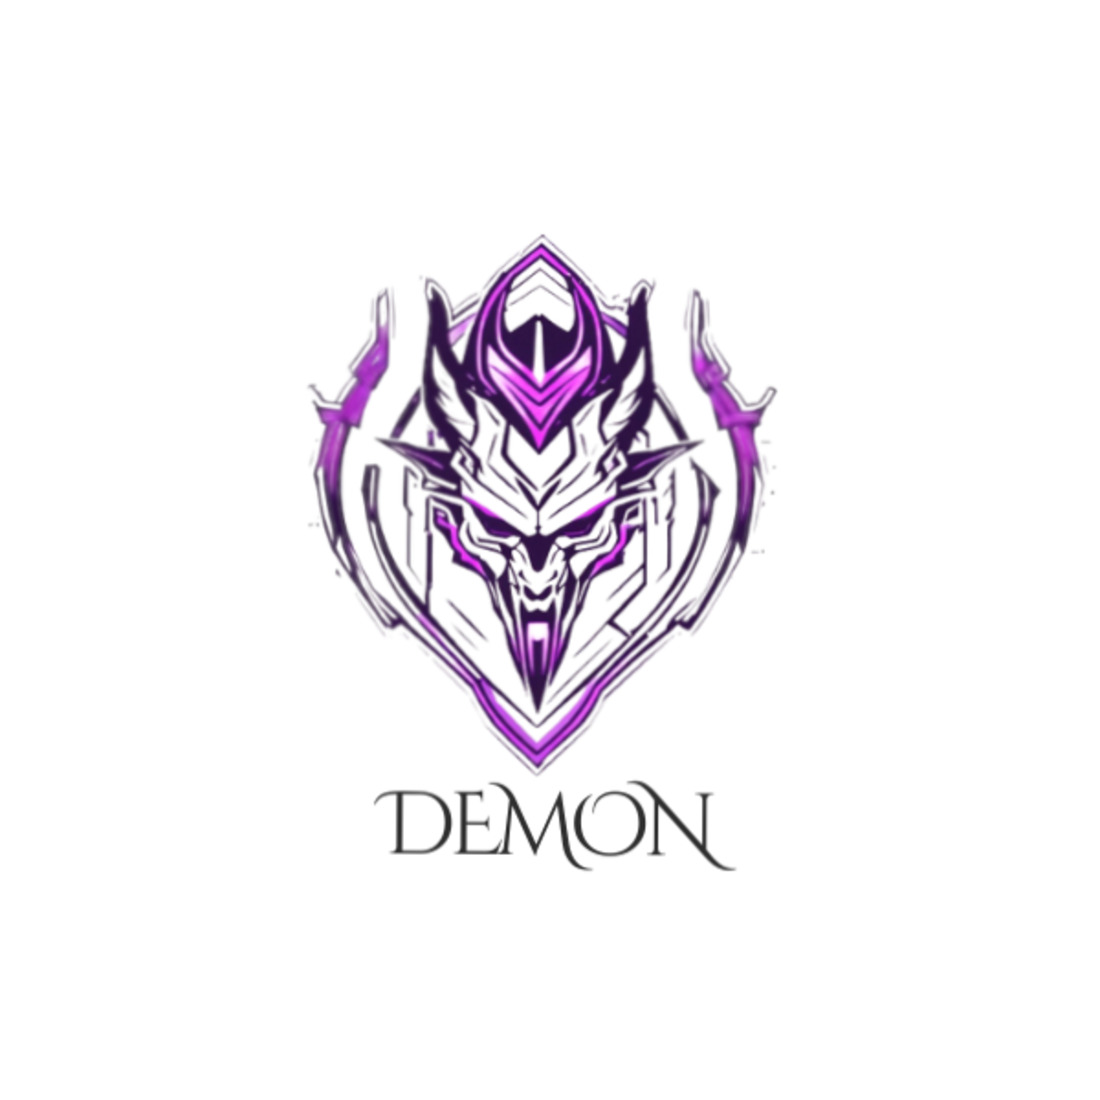 Demon Logo preview image.